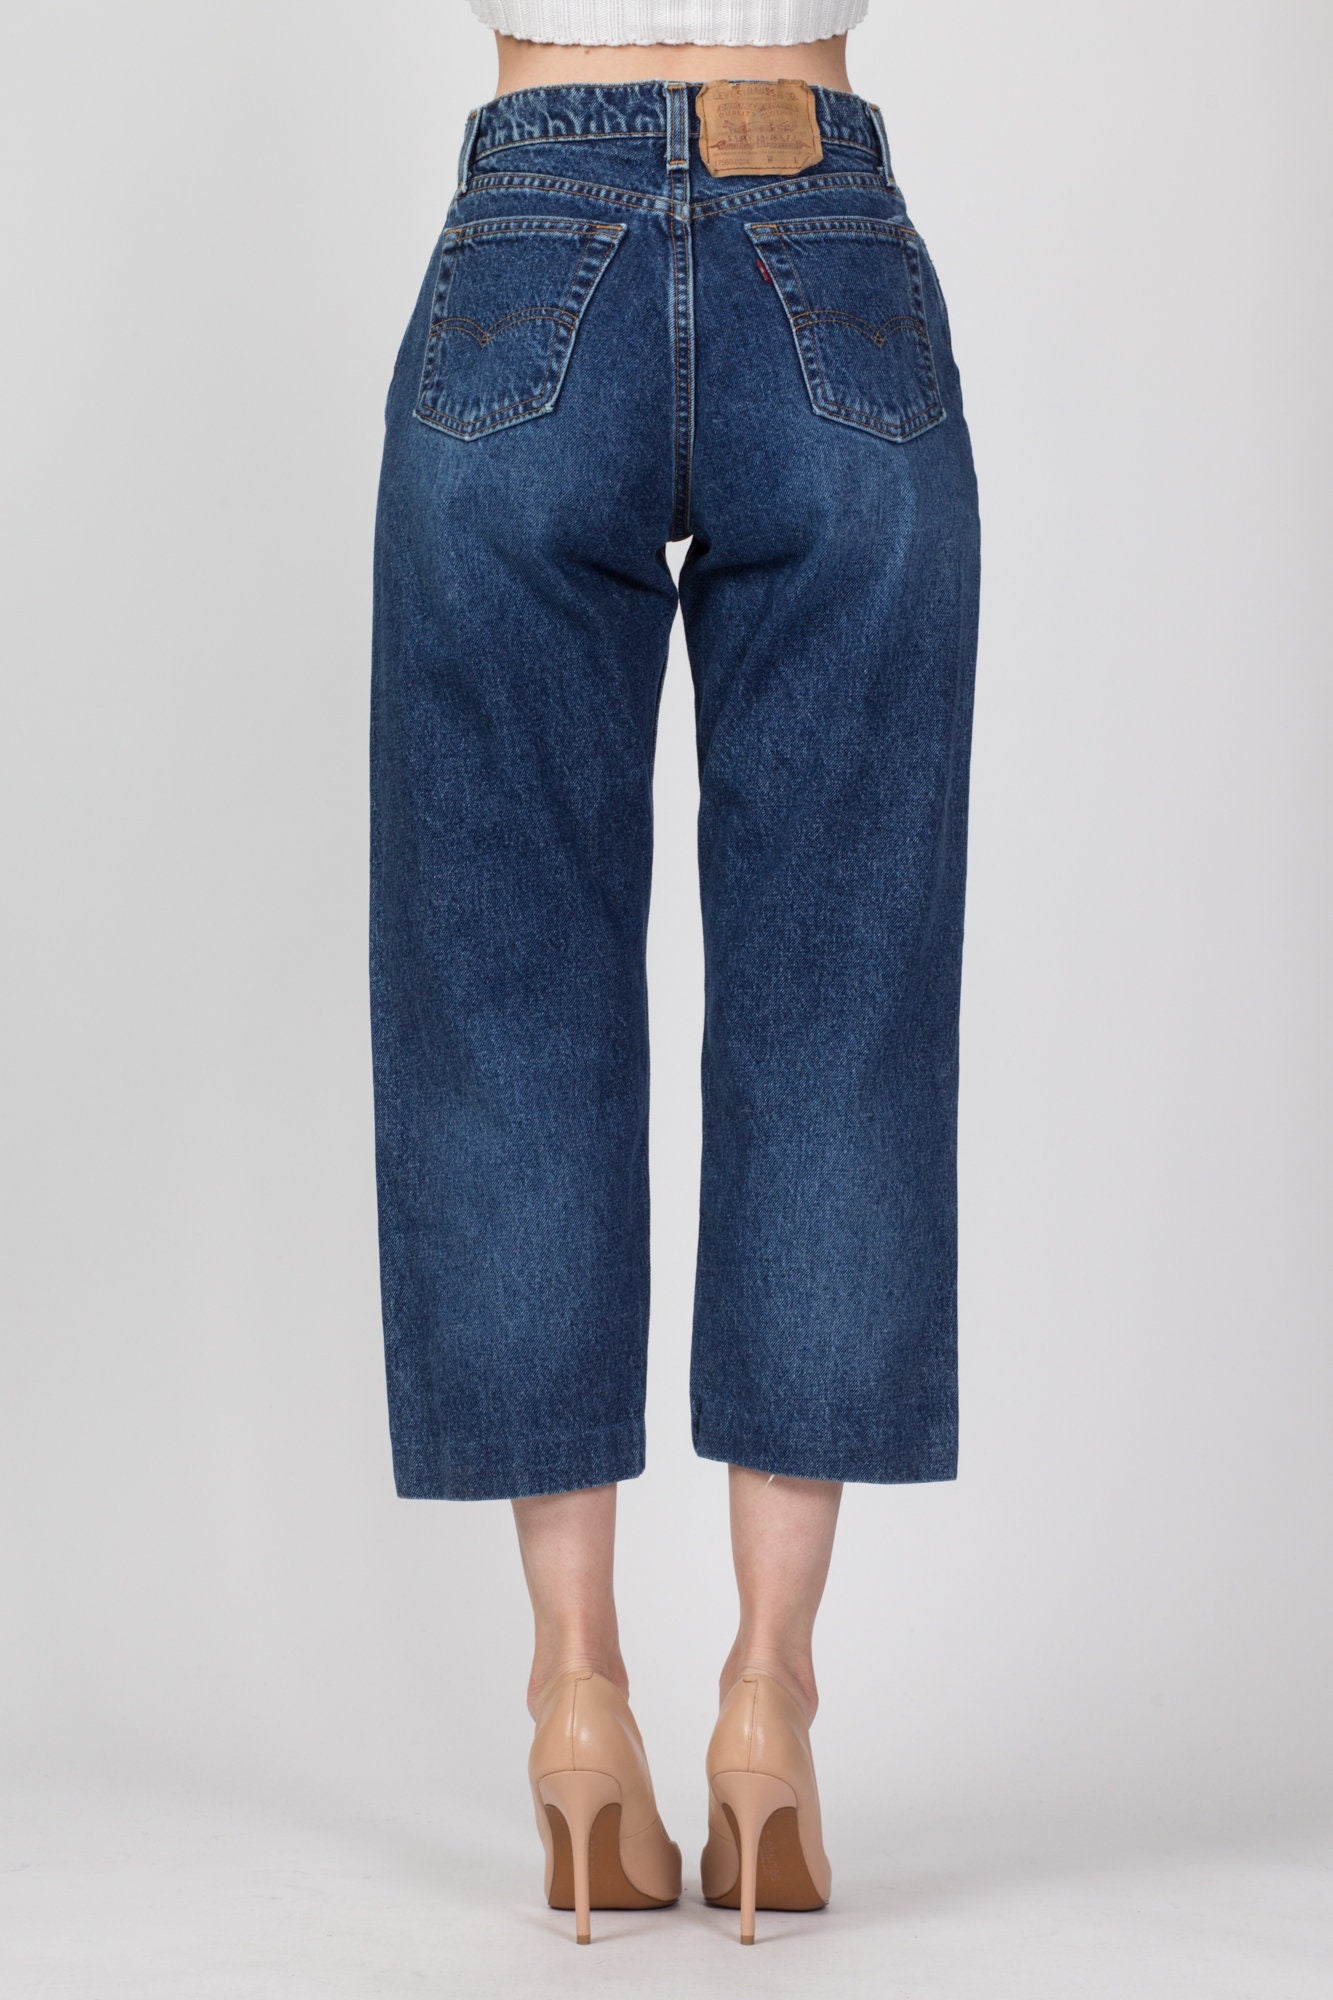 Vintage Levi's Ankle Jeans - Small, 27" 